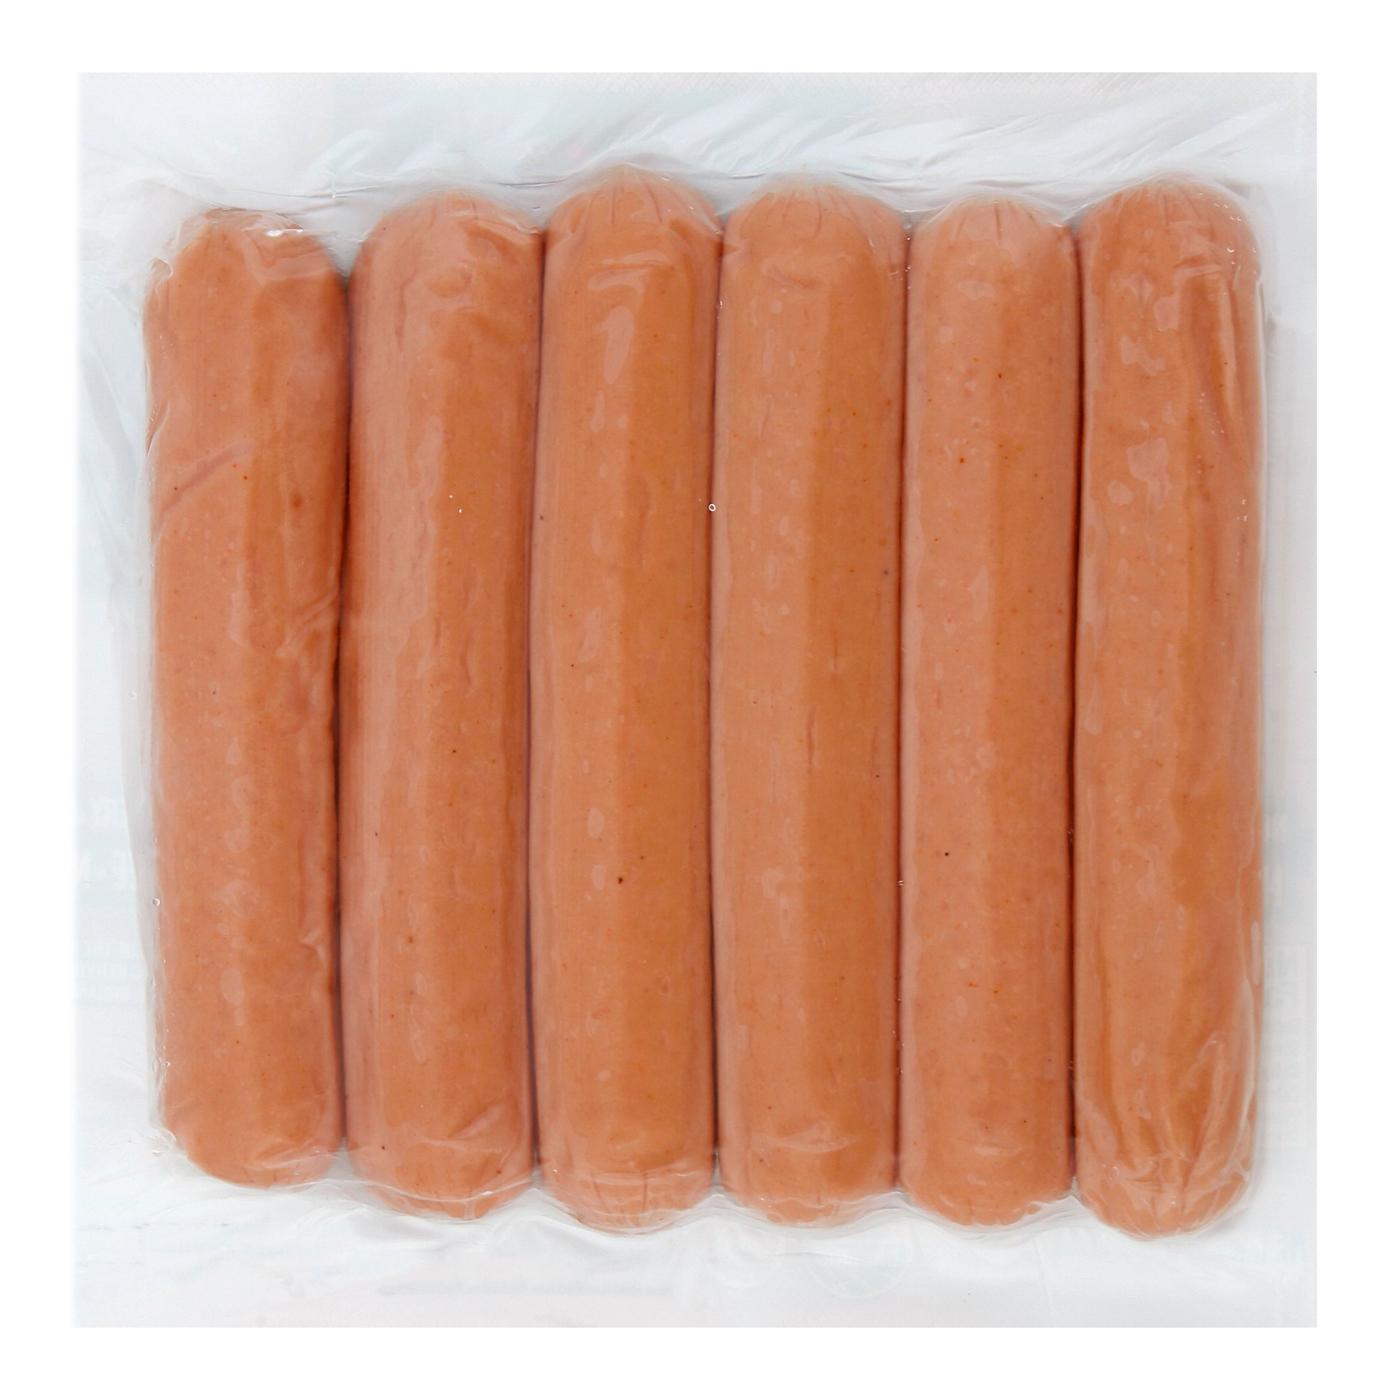 Applegate Organics Turkey Hot Dogs; image 4 of 4